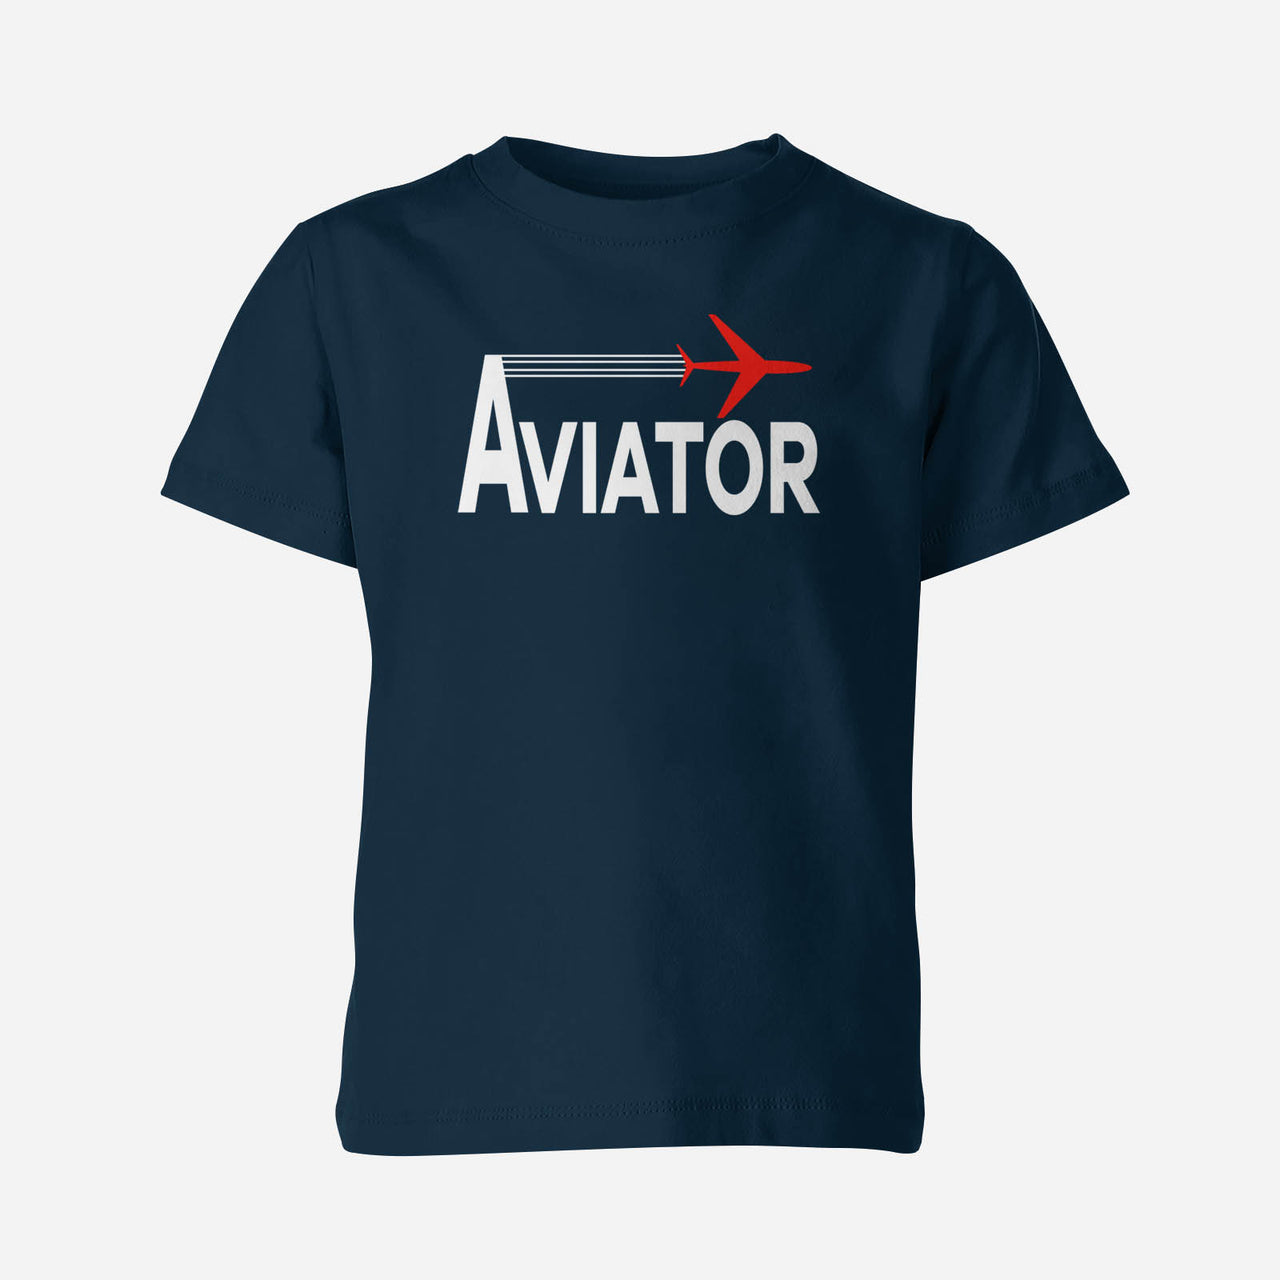 Aviator Designed Children T-Shirts